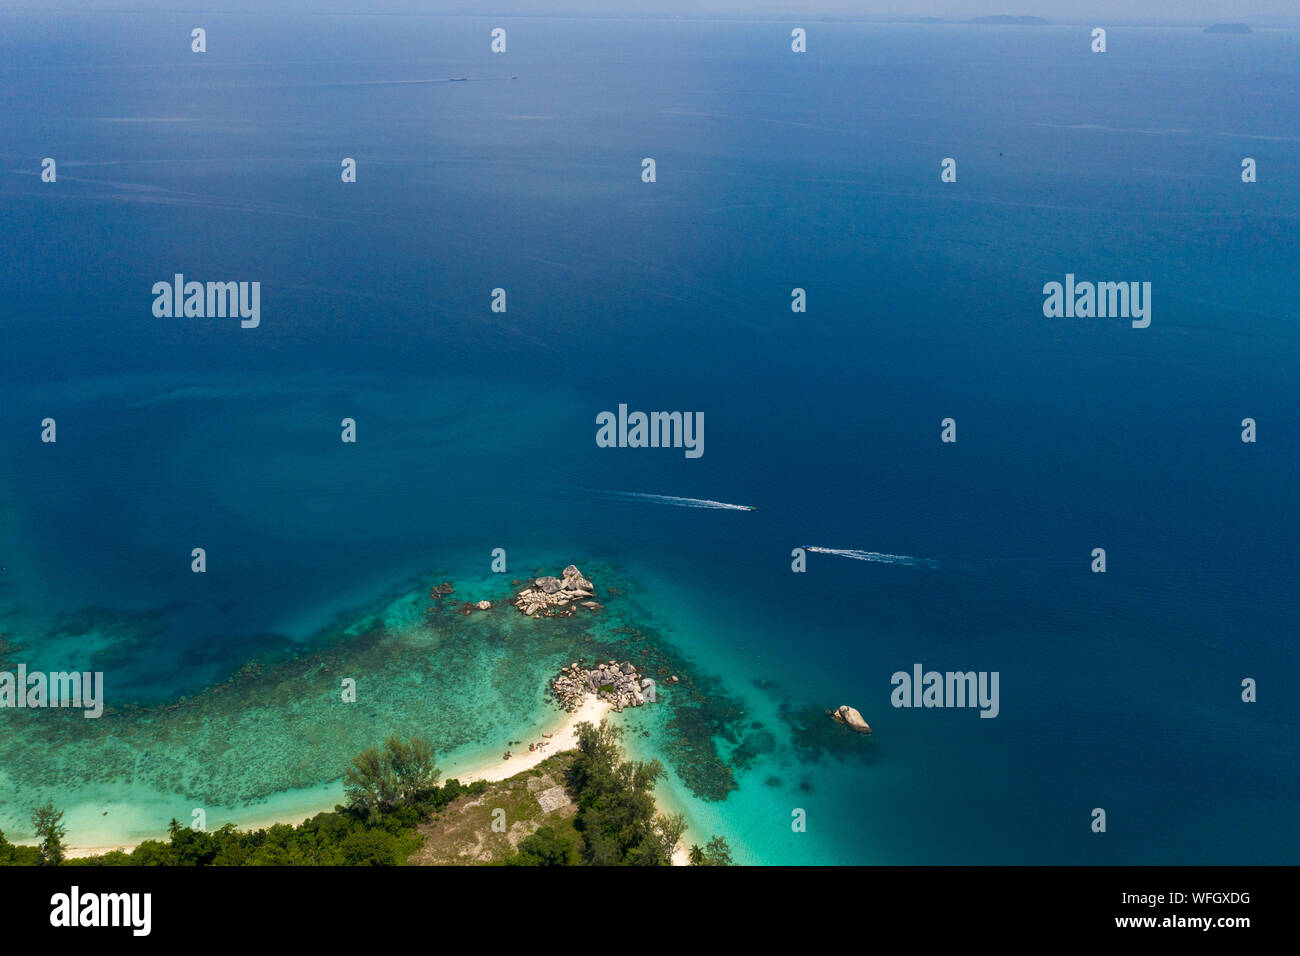 Keke Bay, Pulau Perhentian Besar island, Tenrengganu, Malaysia Stock Photo